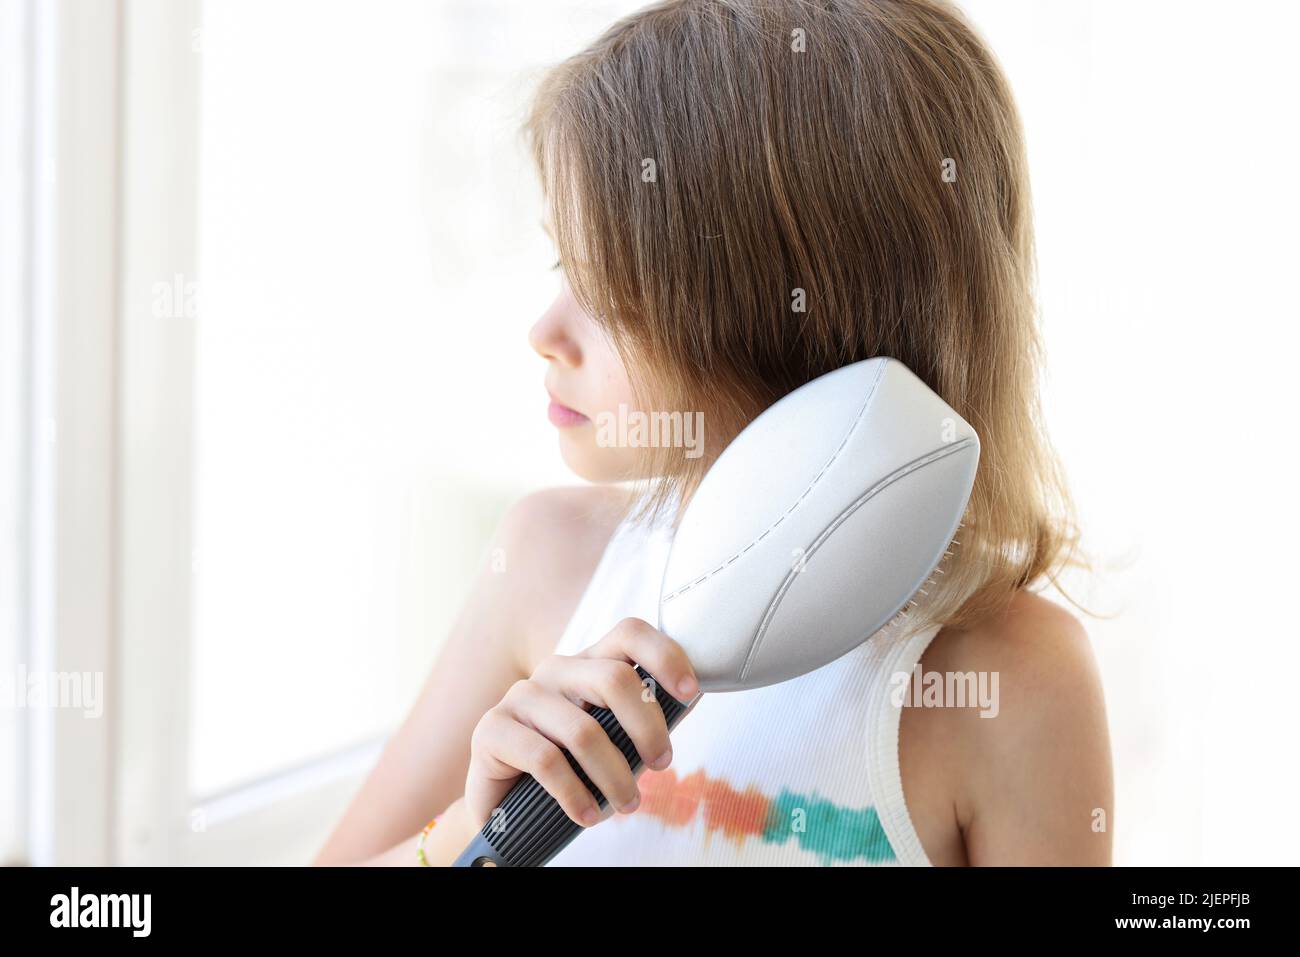 Kleines Mädchen kämmt Haare mit Kamm Nahaufnahme Stockfoto